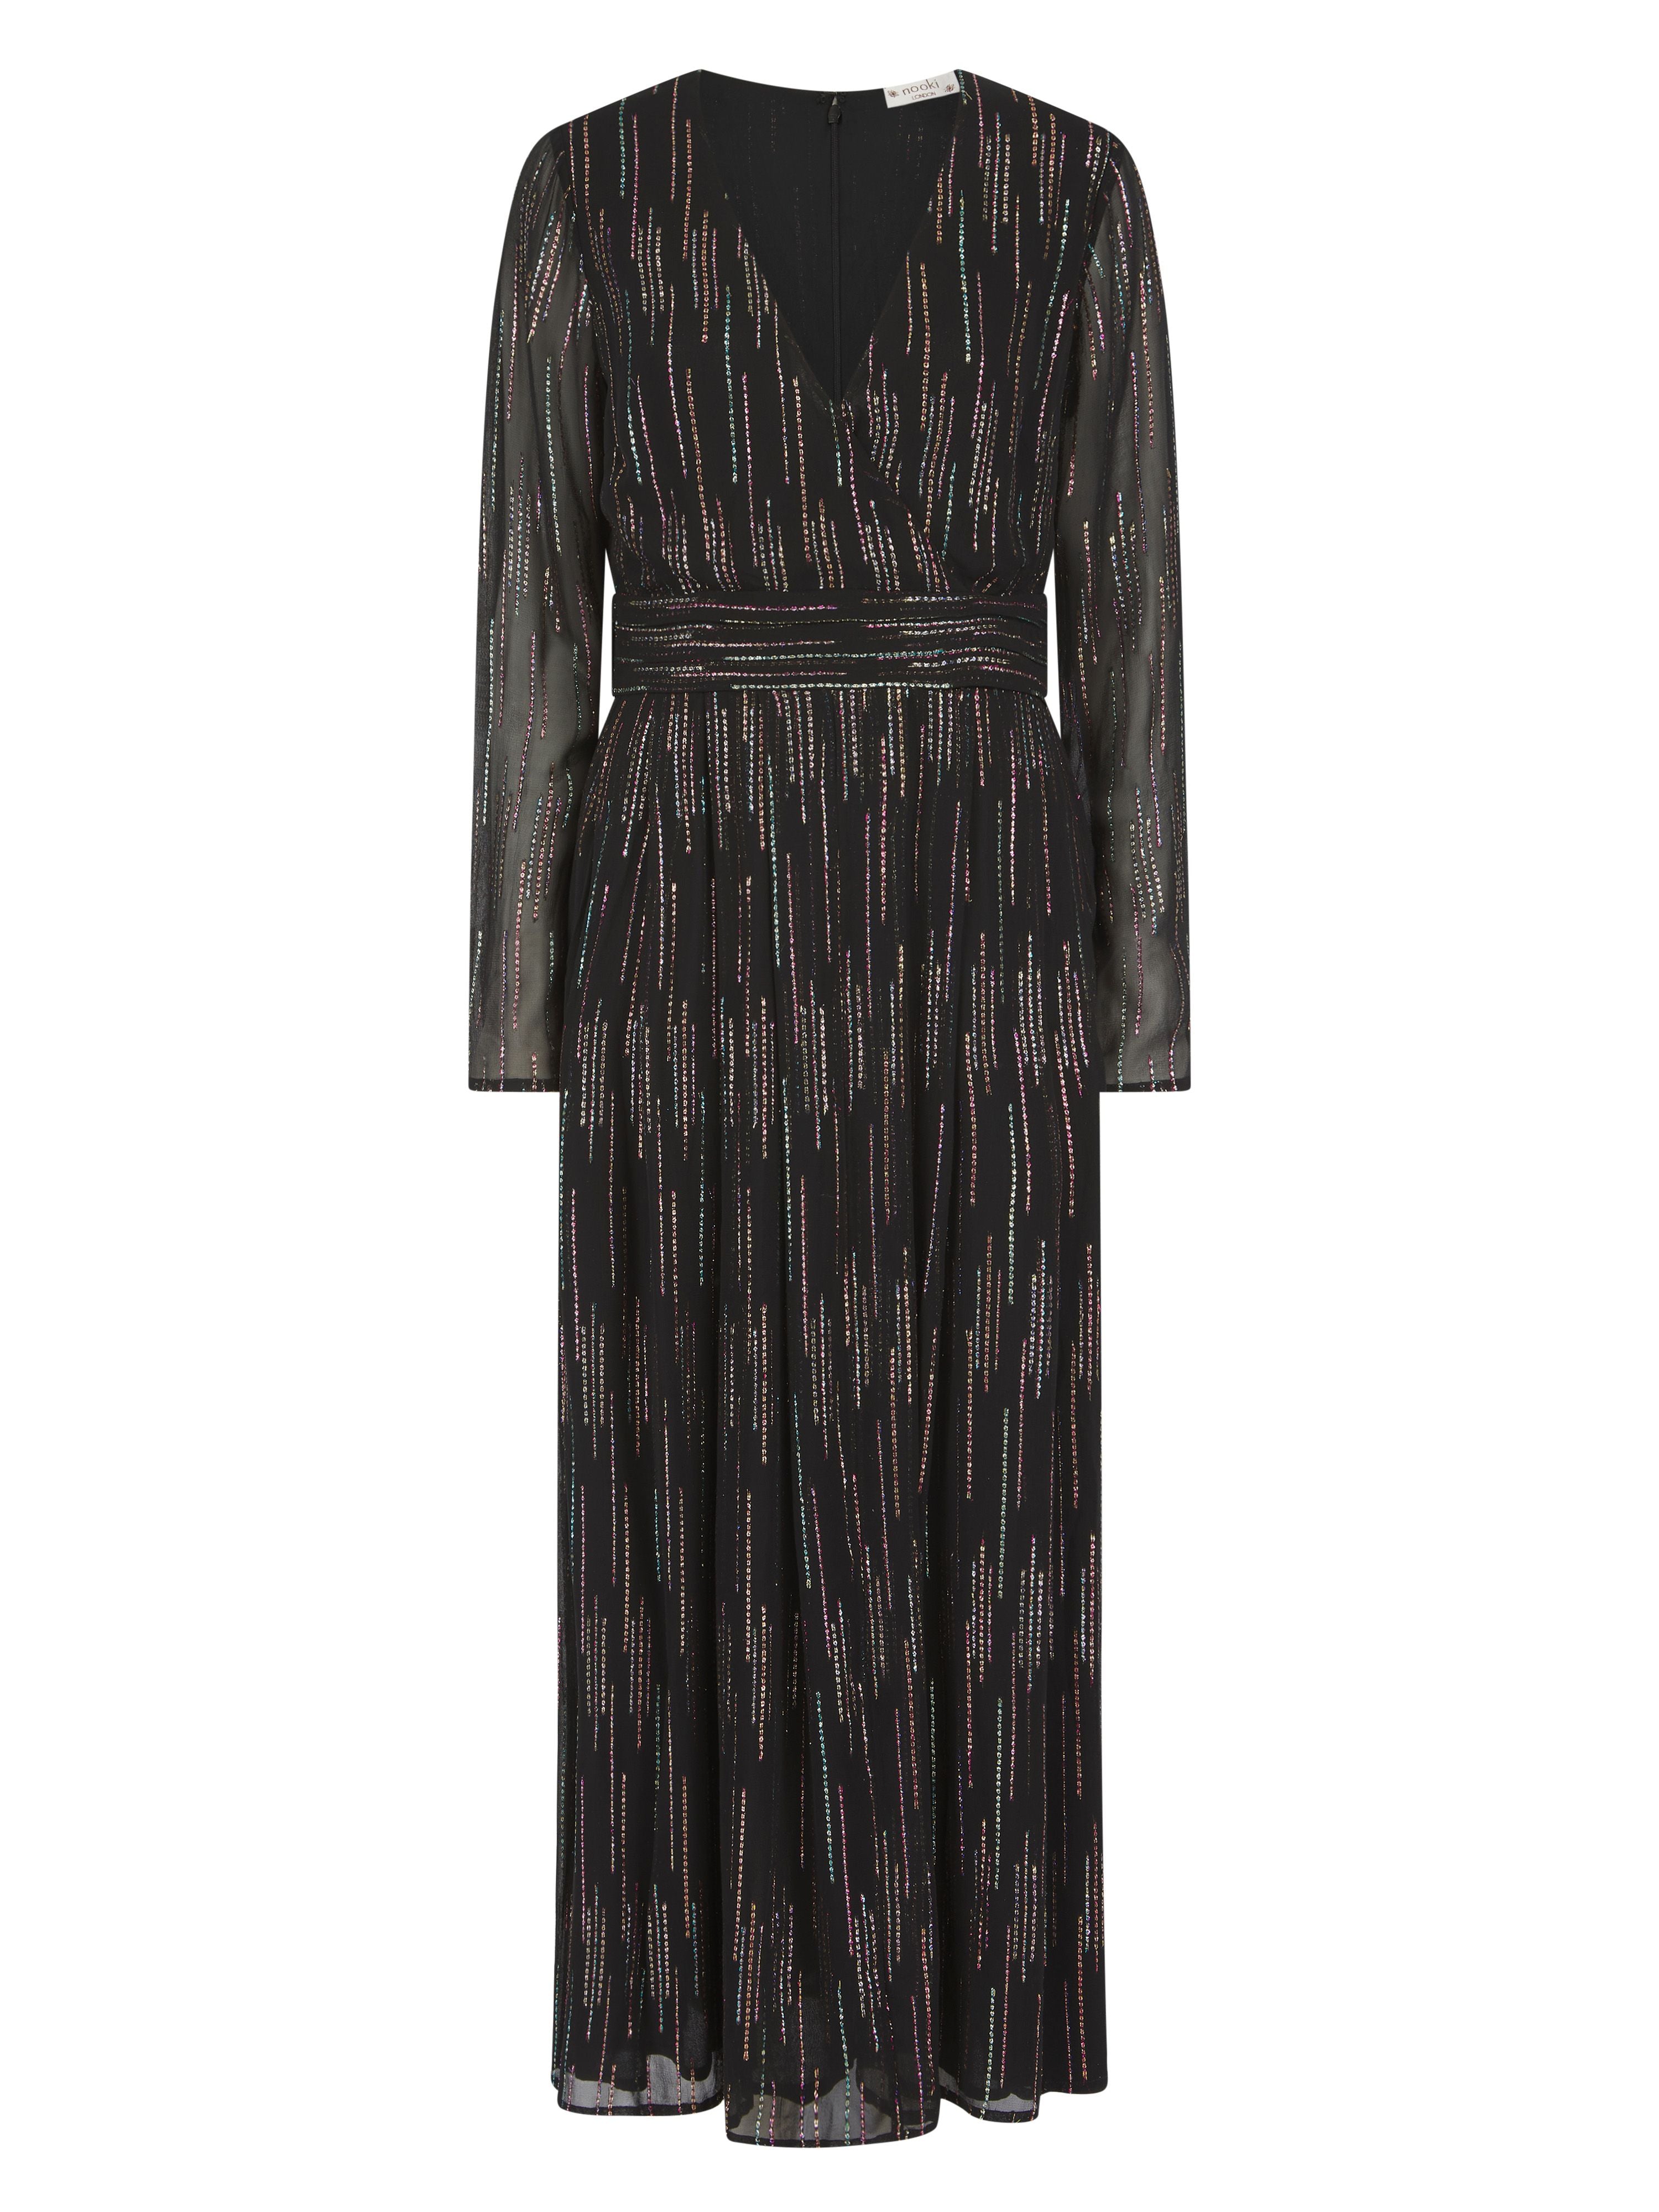 Women’s Mariah Metallic Jacquard Dress-Black Extra Small Nooki Design